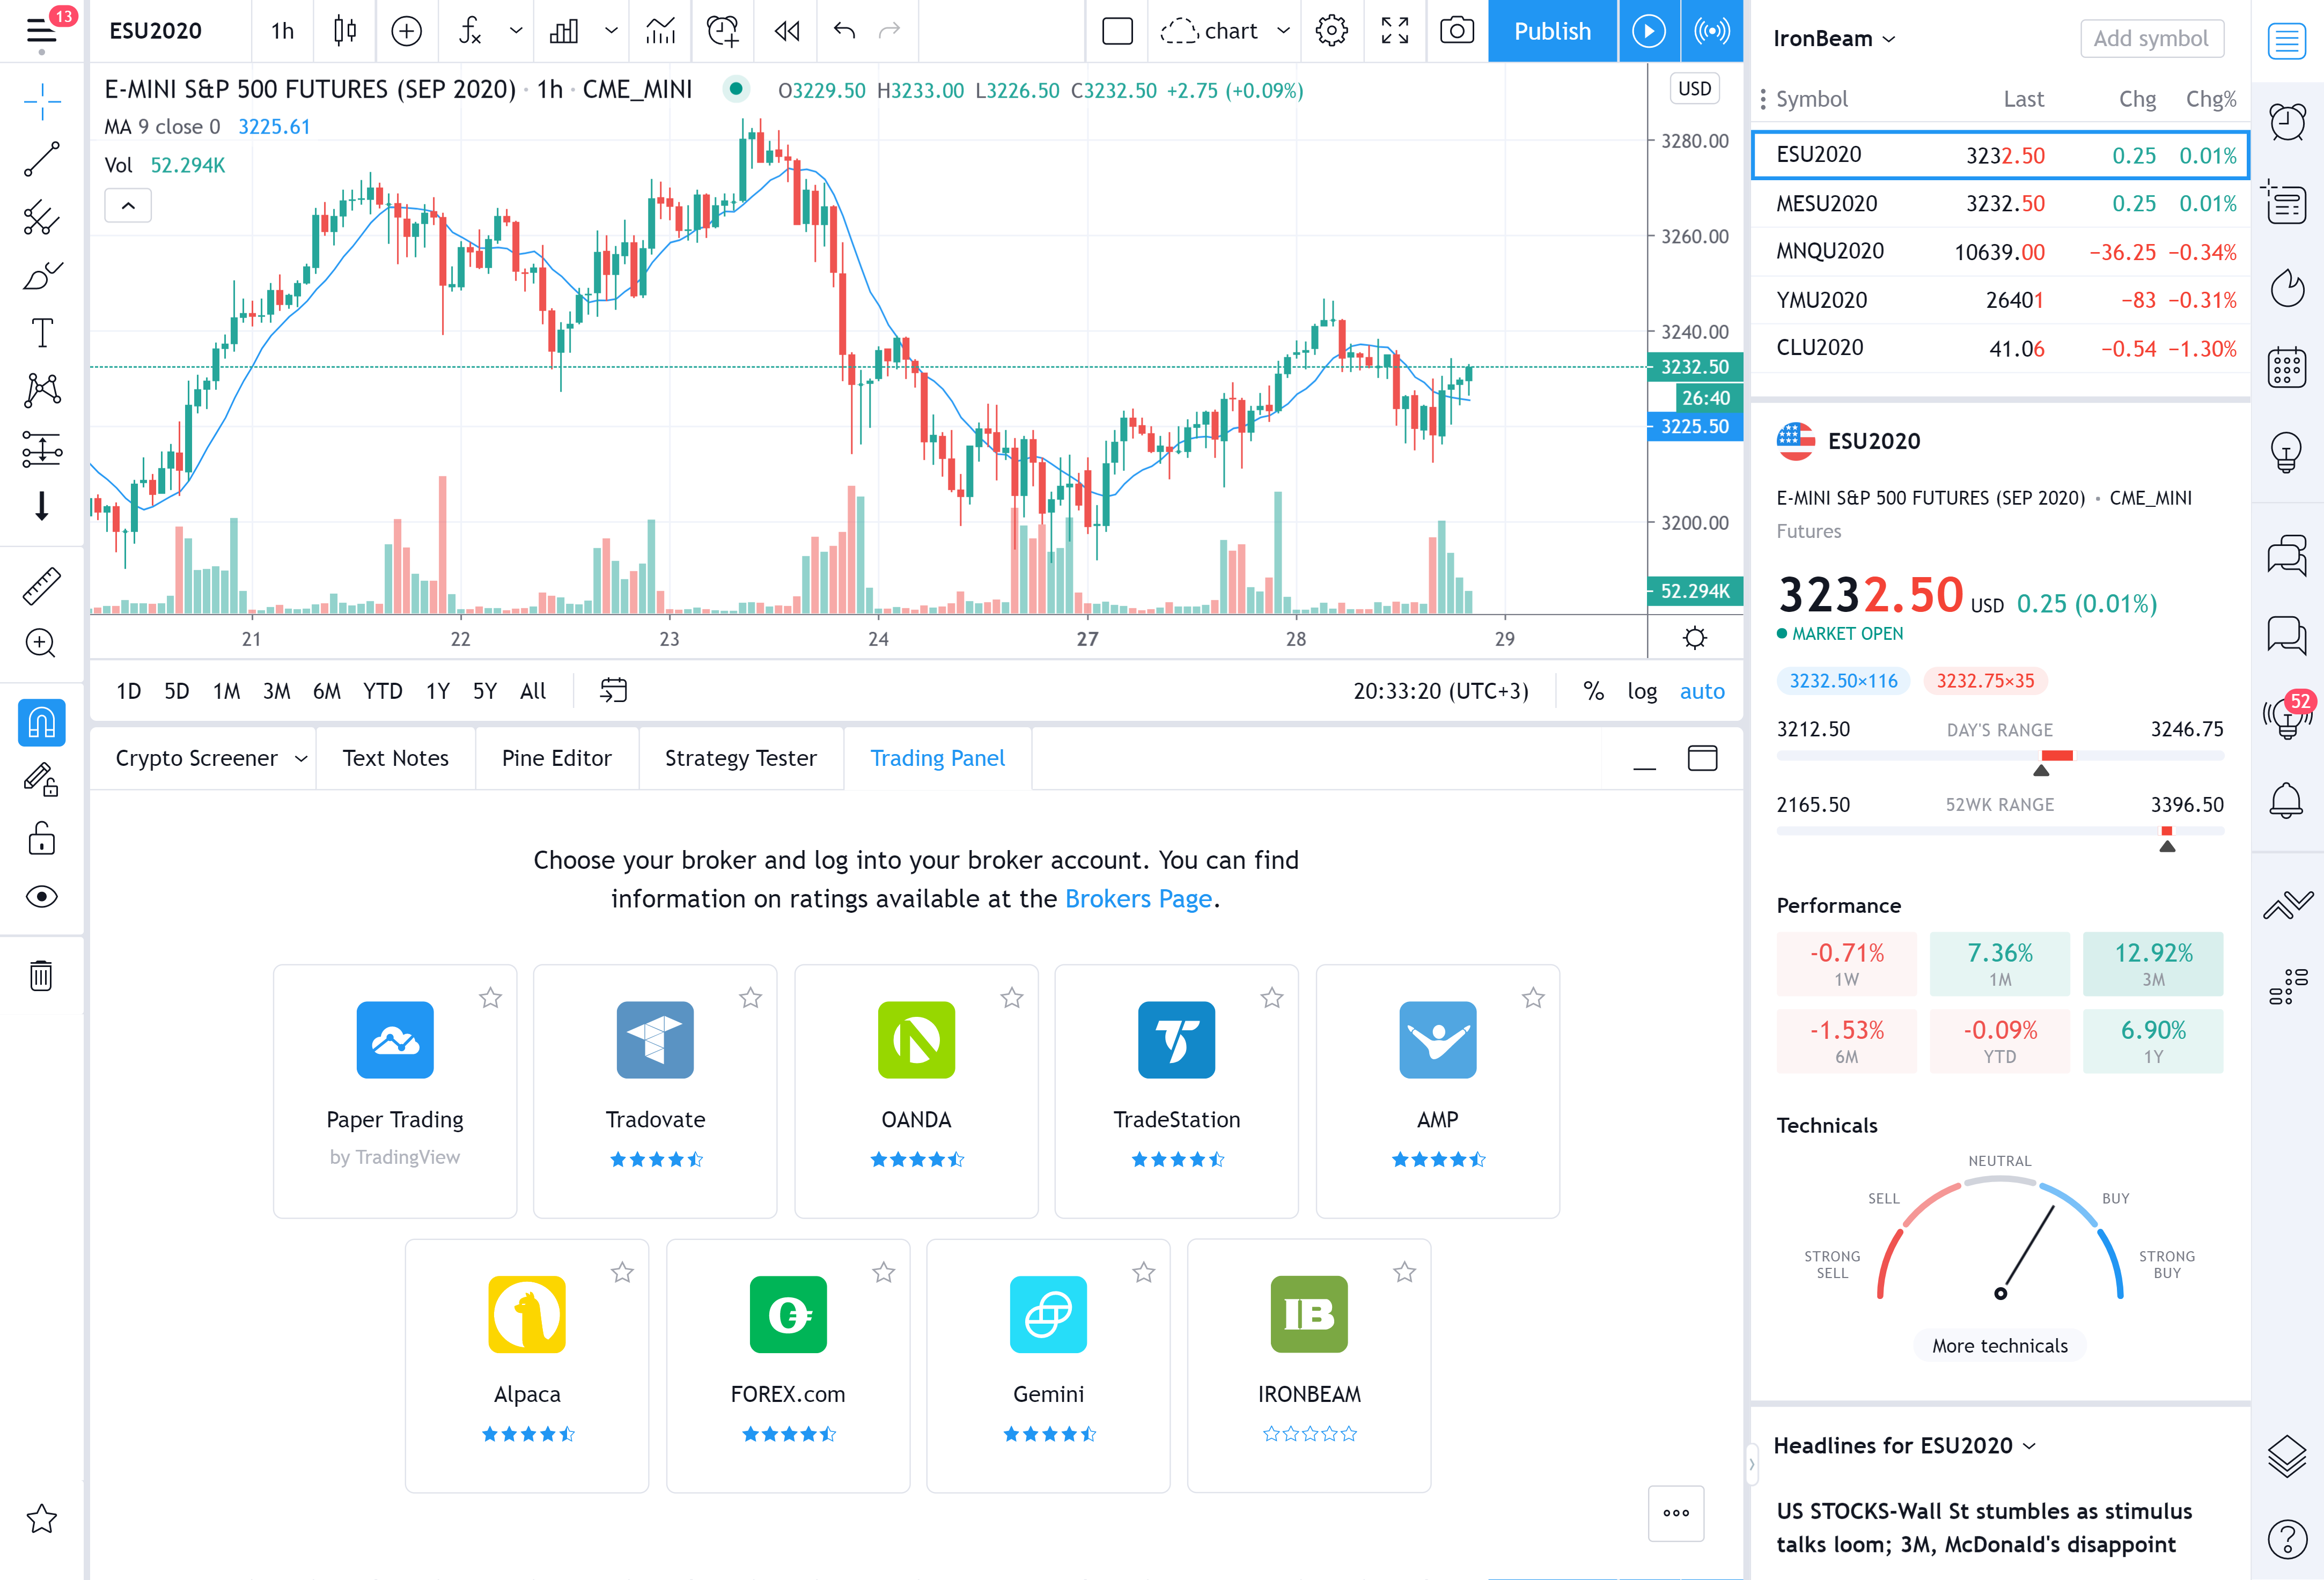 www.tradingview.com_chart_1 - IRONBEAM